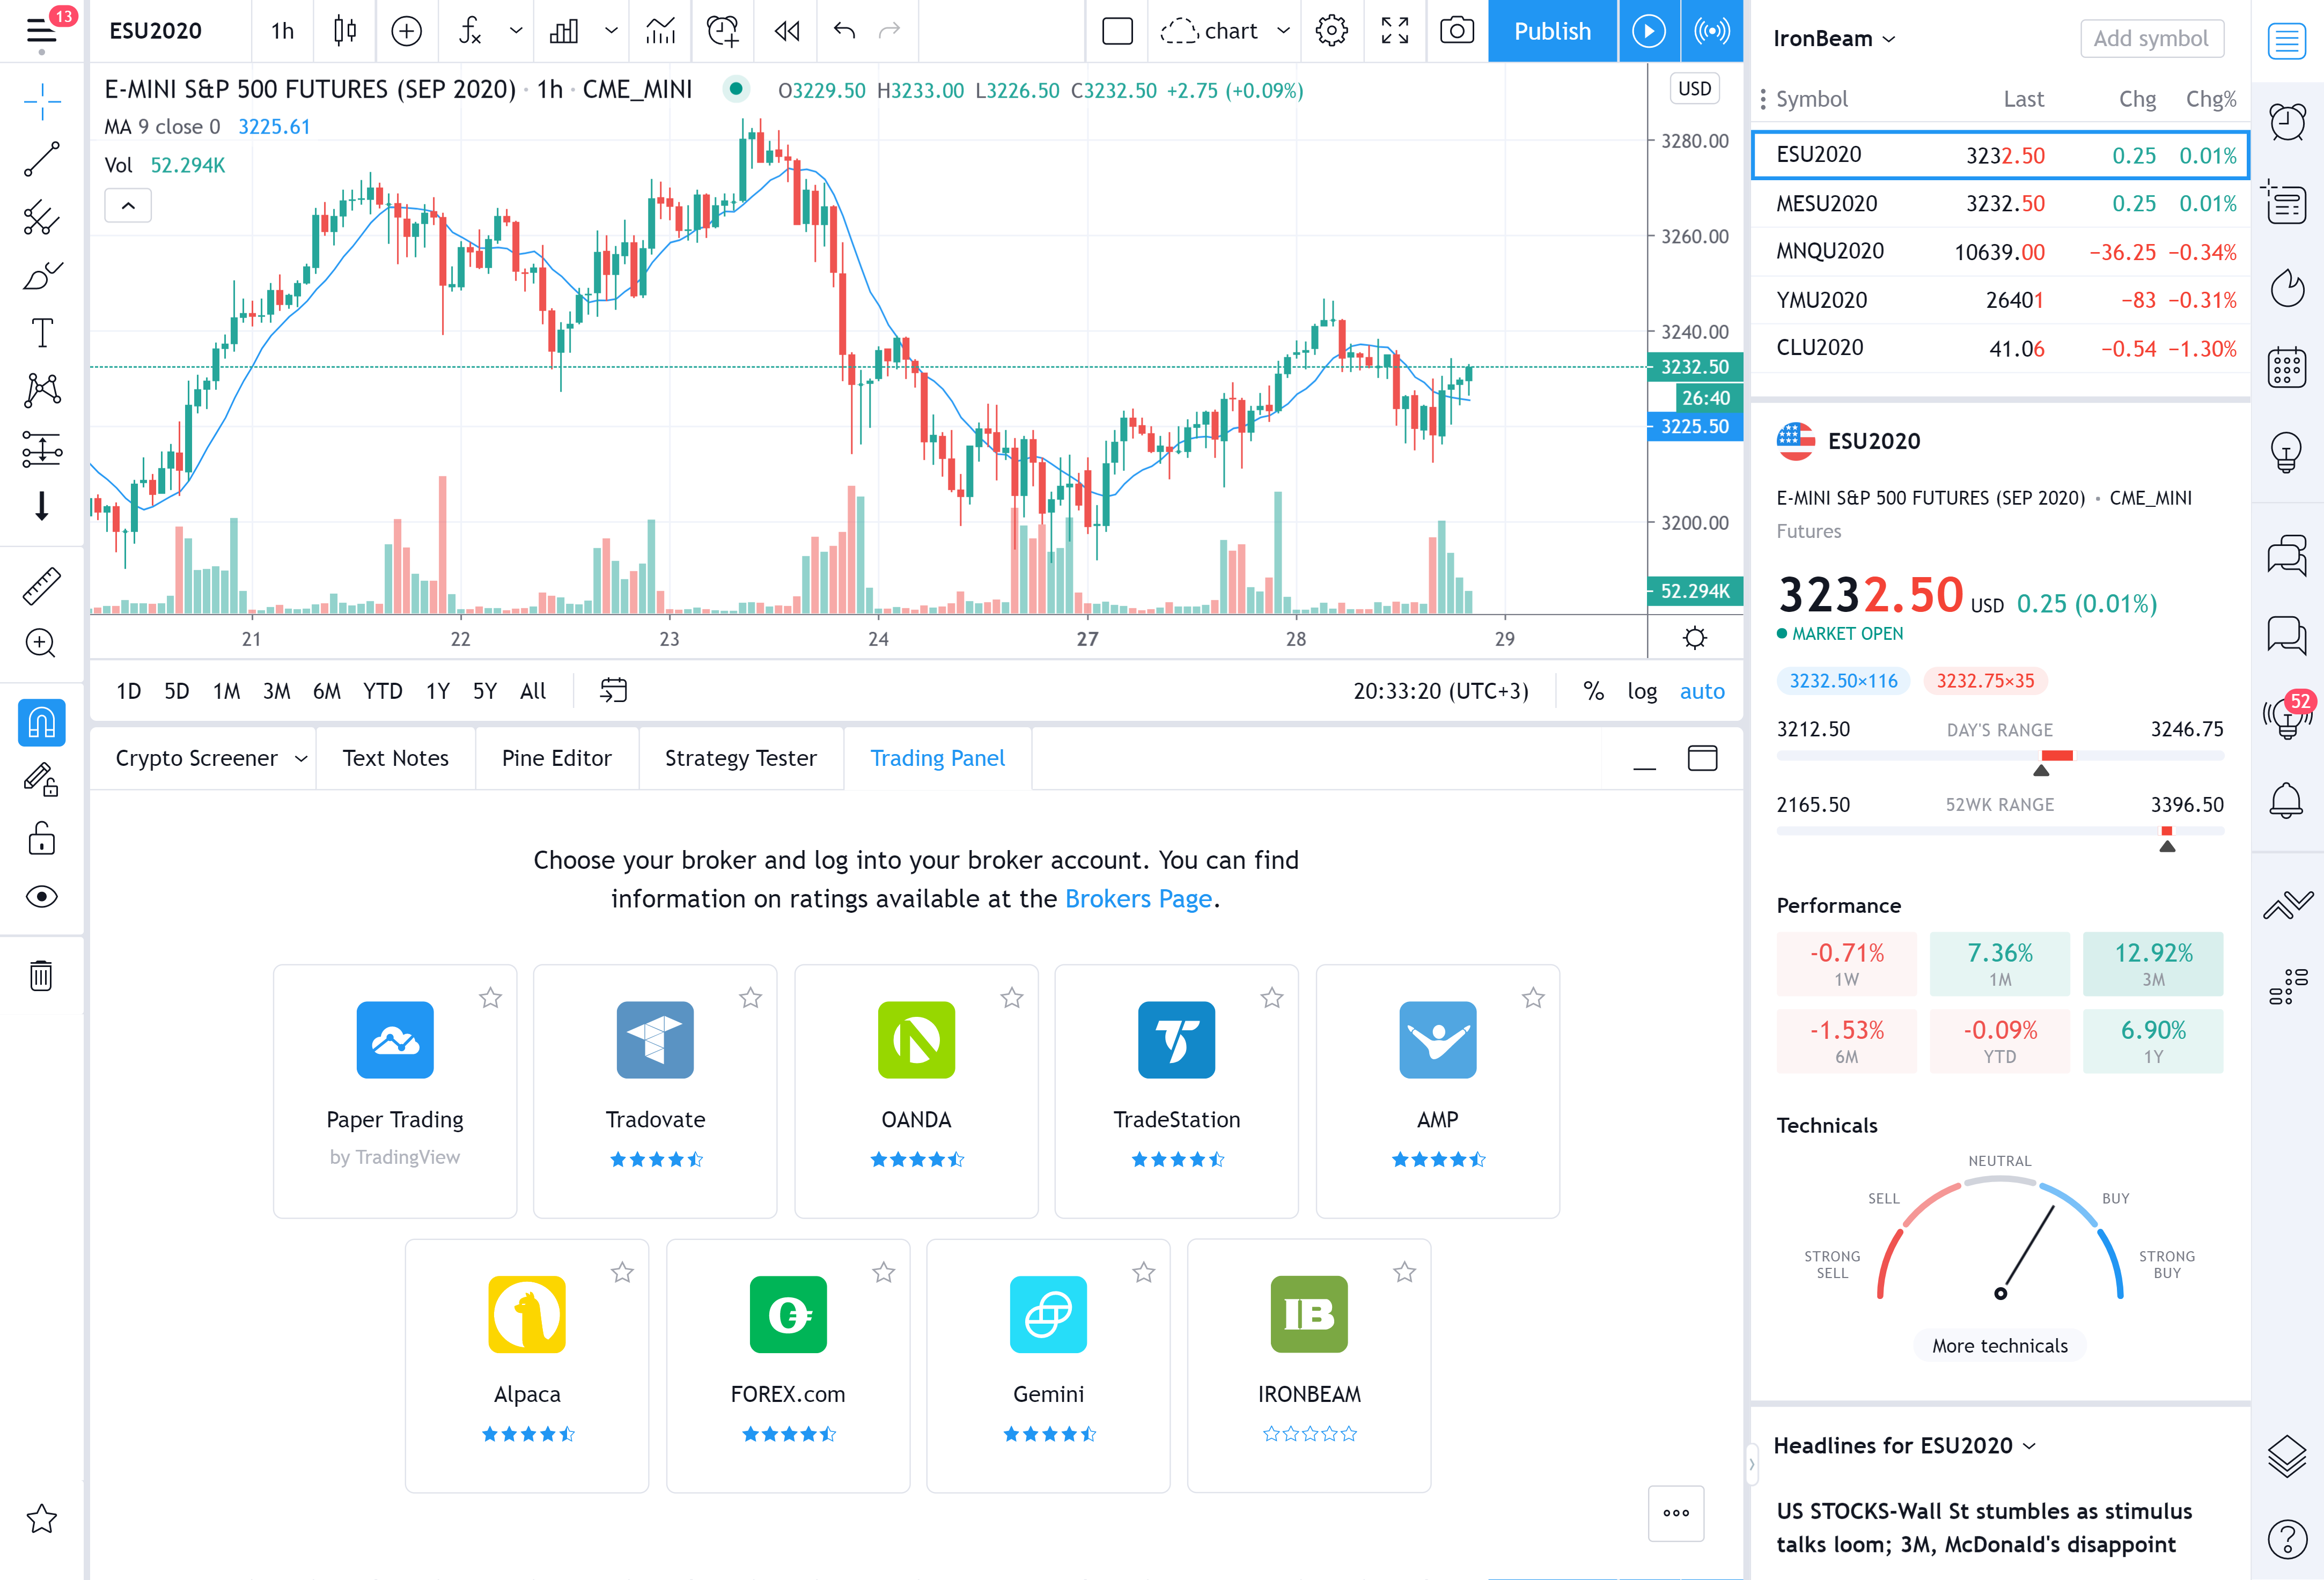 www.tradingview.com_chart_1 - IRONBEAM